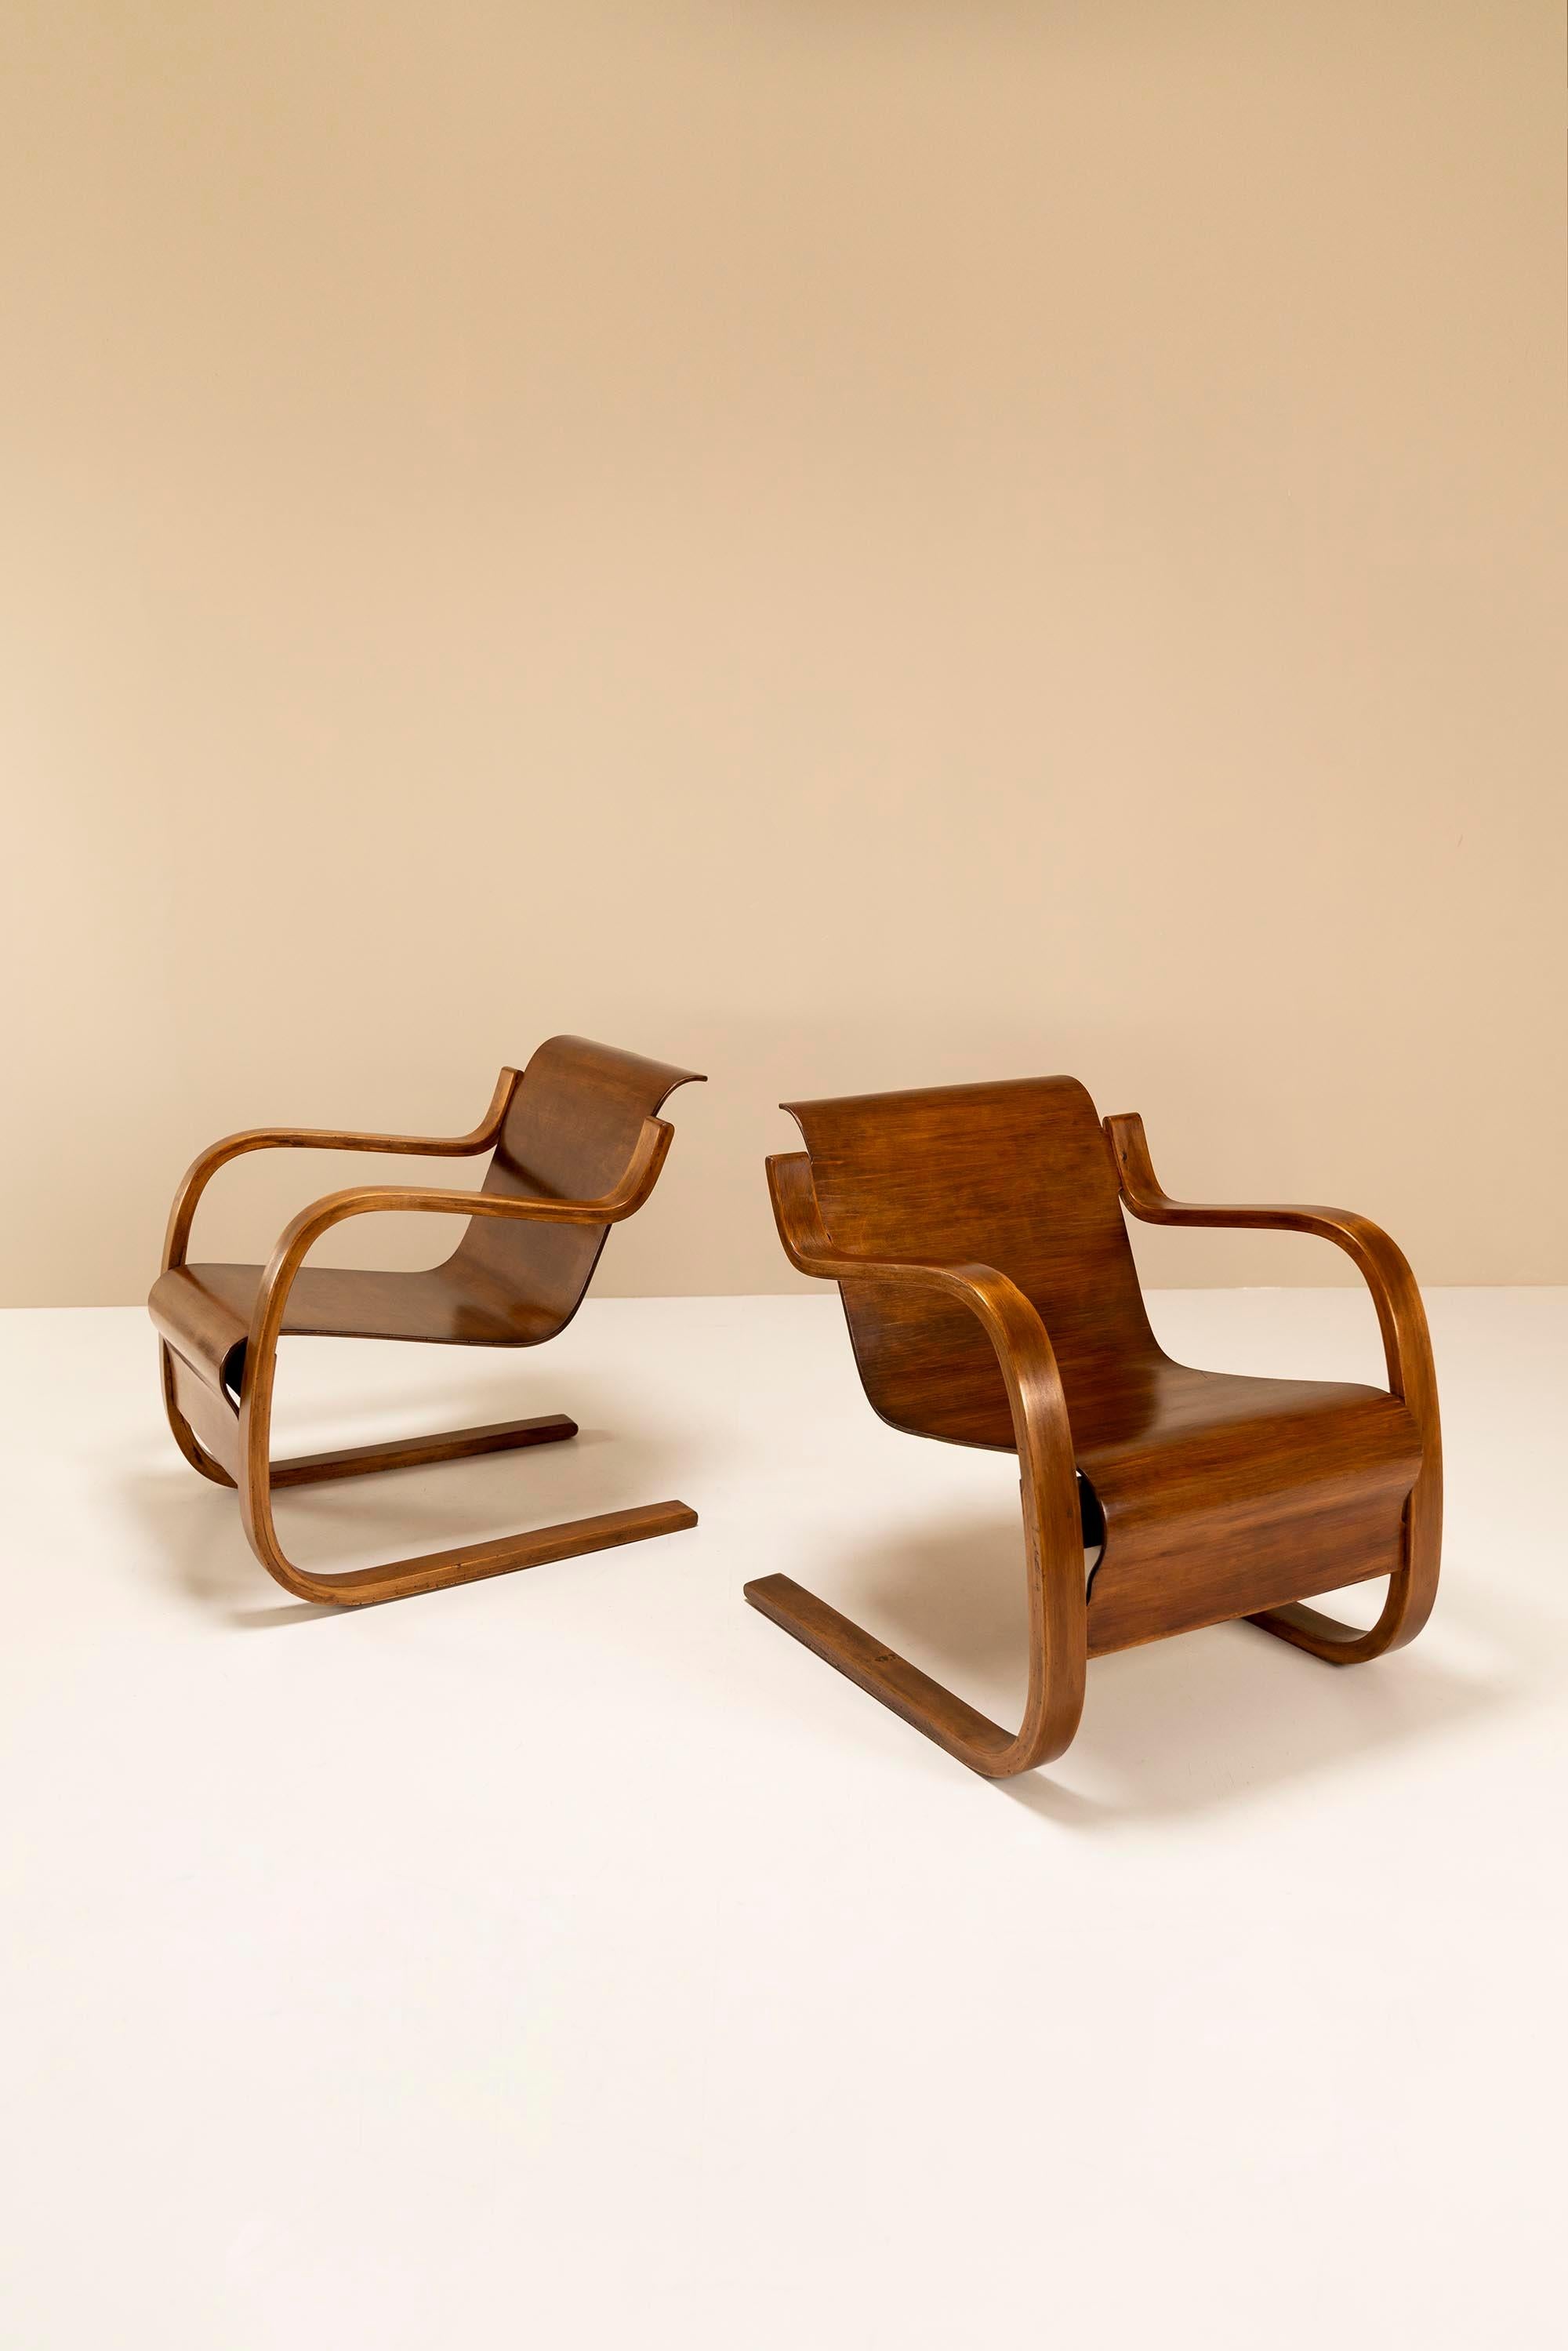 Alvar Aalto Lounge Chair in Birch Plywood Model 31/41, 1935 Finland 4